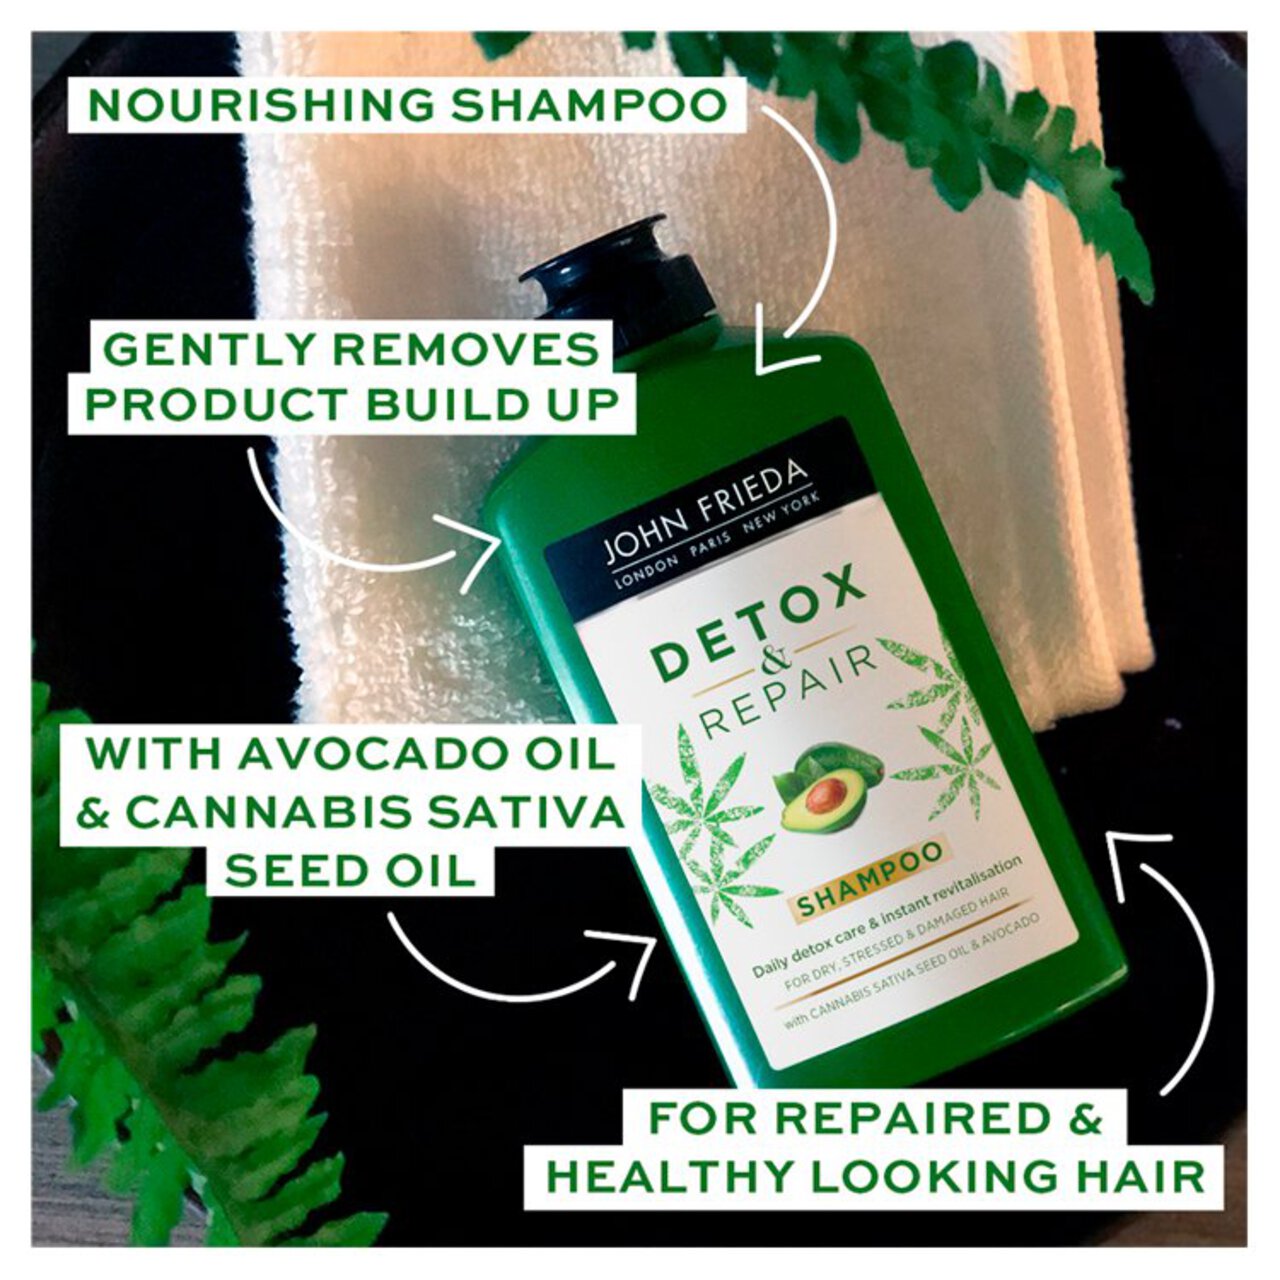 John Frieda Detox & Repair Shampoo for Dry, Stressed & Damaged Hair 250ml